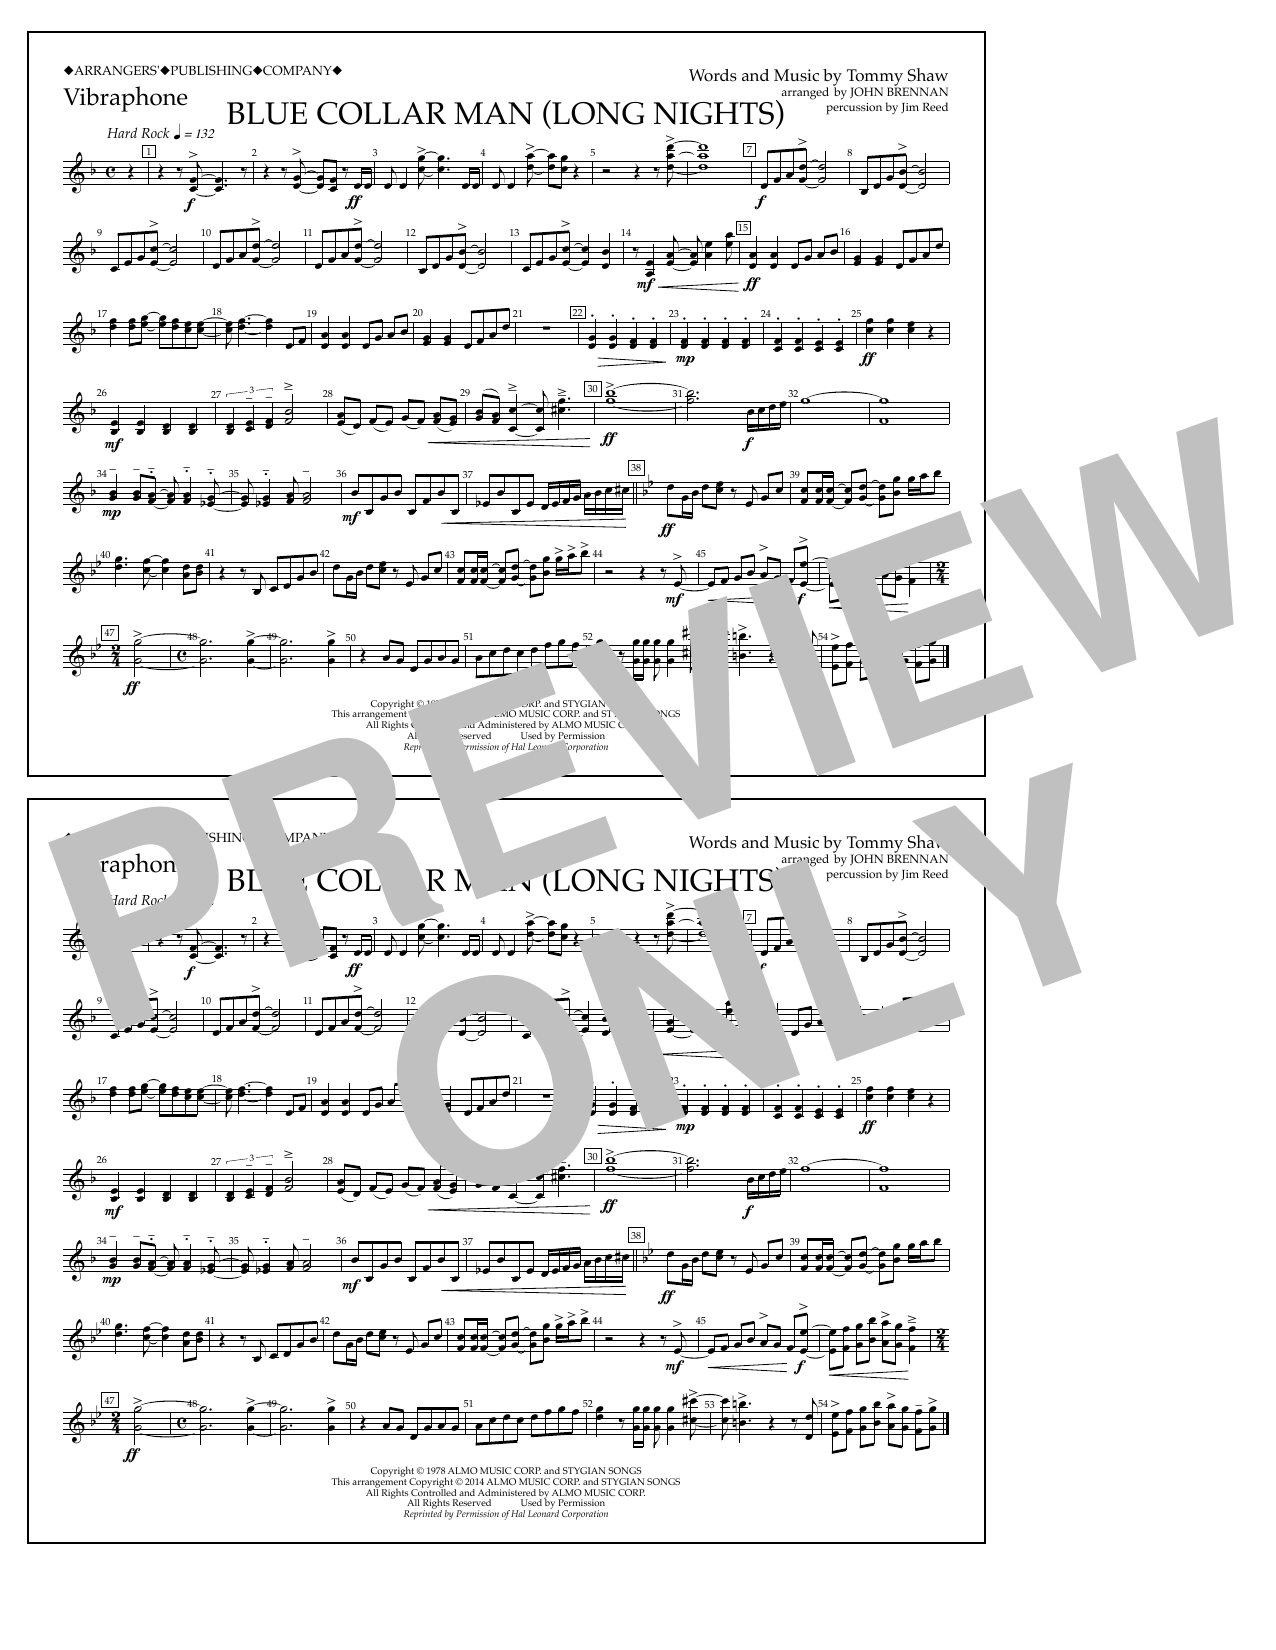 John Brennan Blue Collar Man (Long Nights) - Vibraphone Sheet Music Notes & Chords for Marching Band - Download or Print PDF